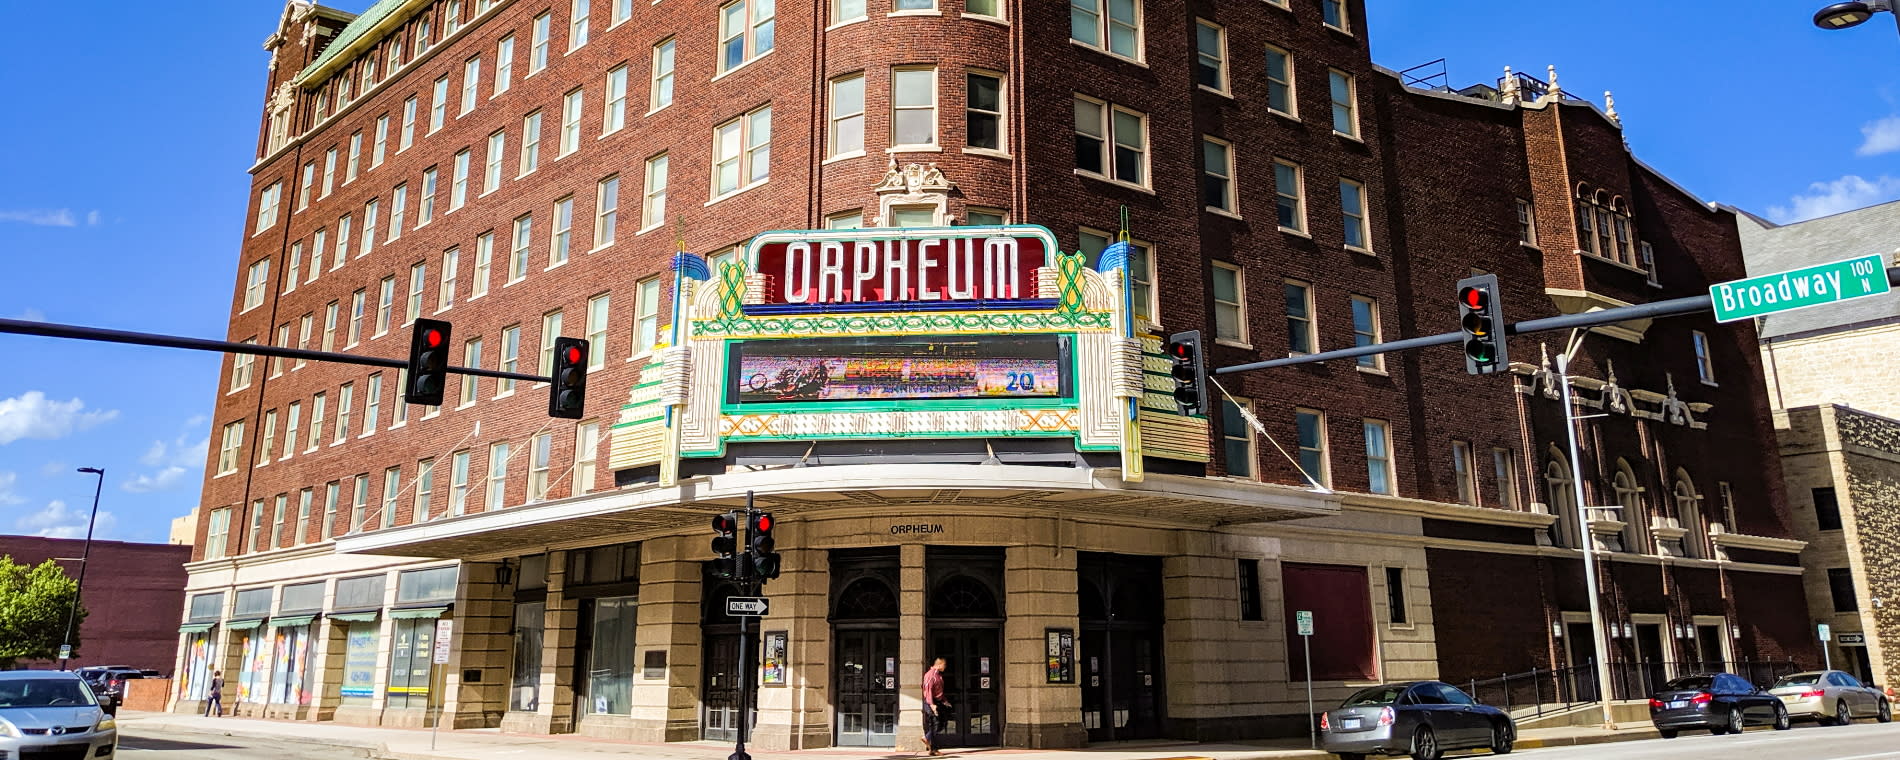 Orpheum Theater Entrance